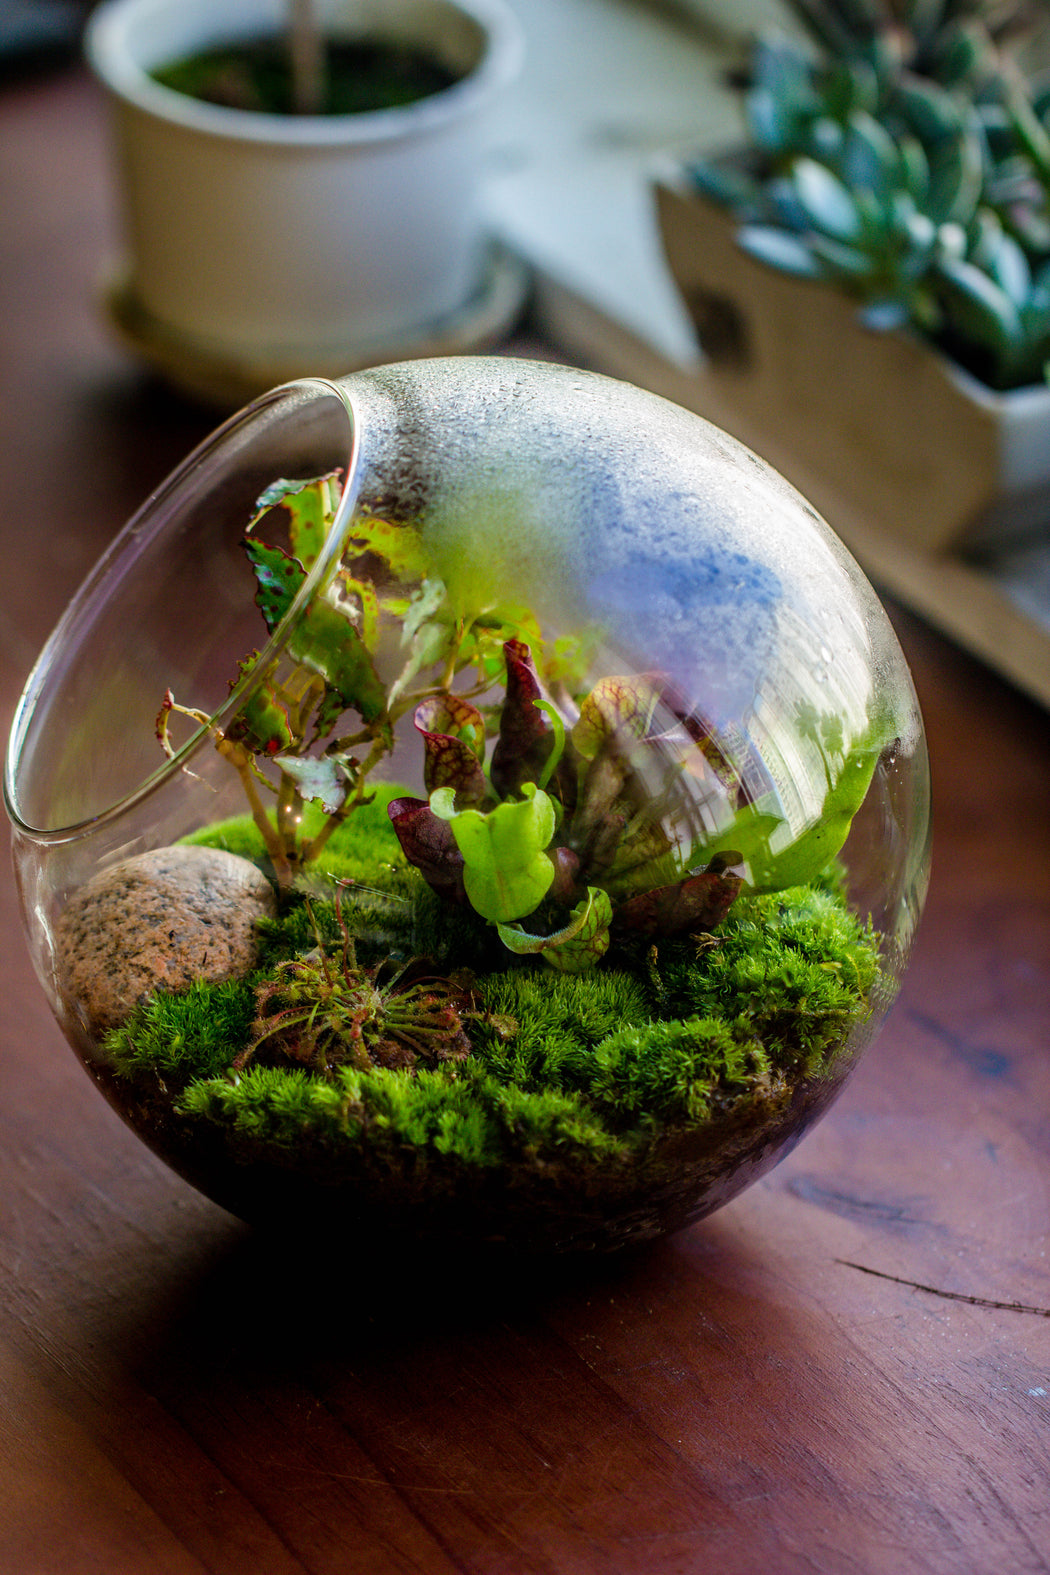 A glass terrarium, a little moss, and a mandrake. This piece makes